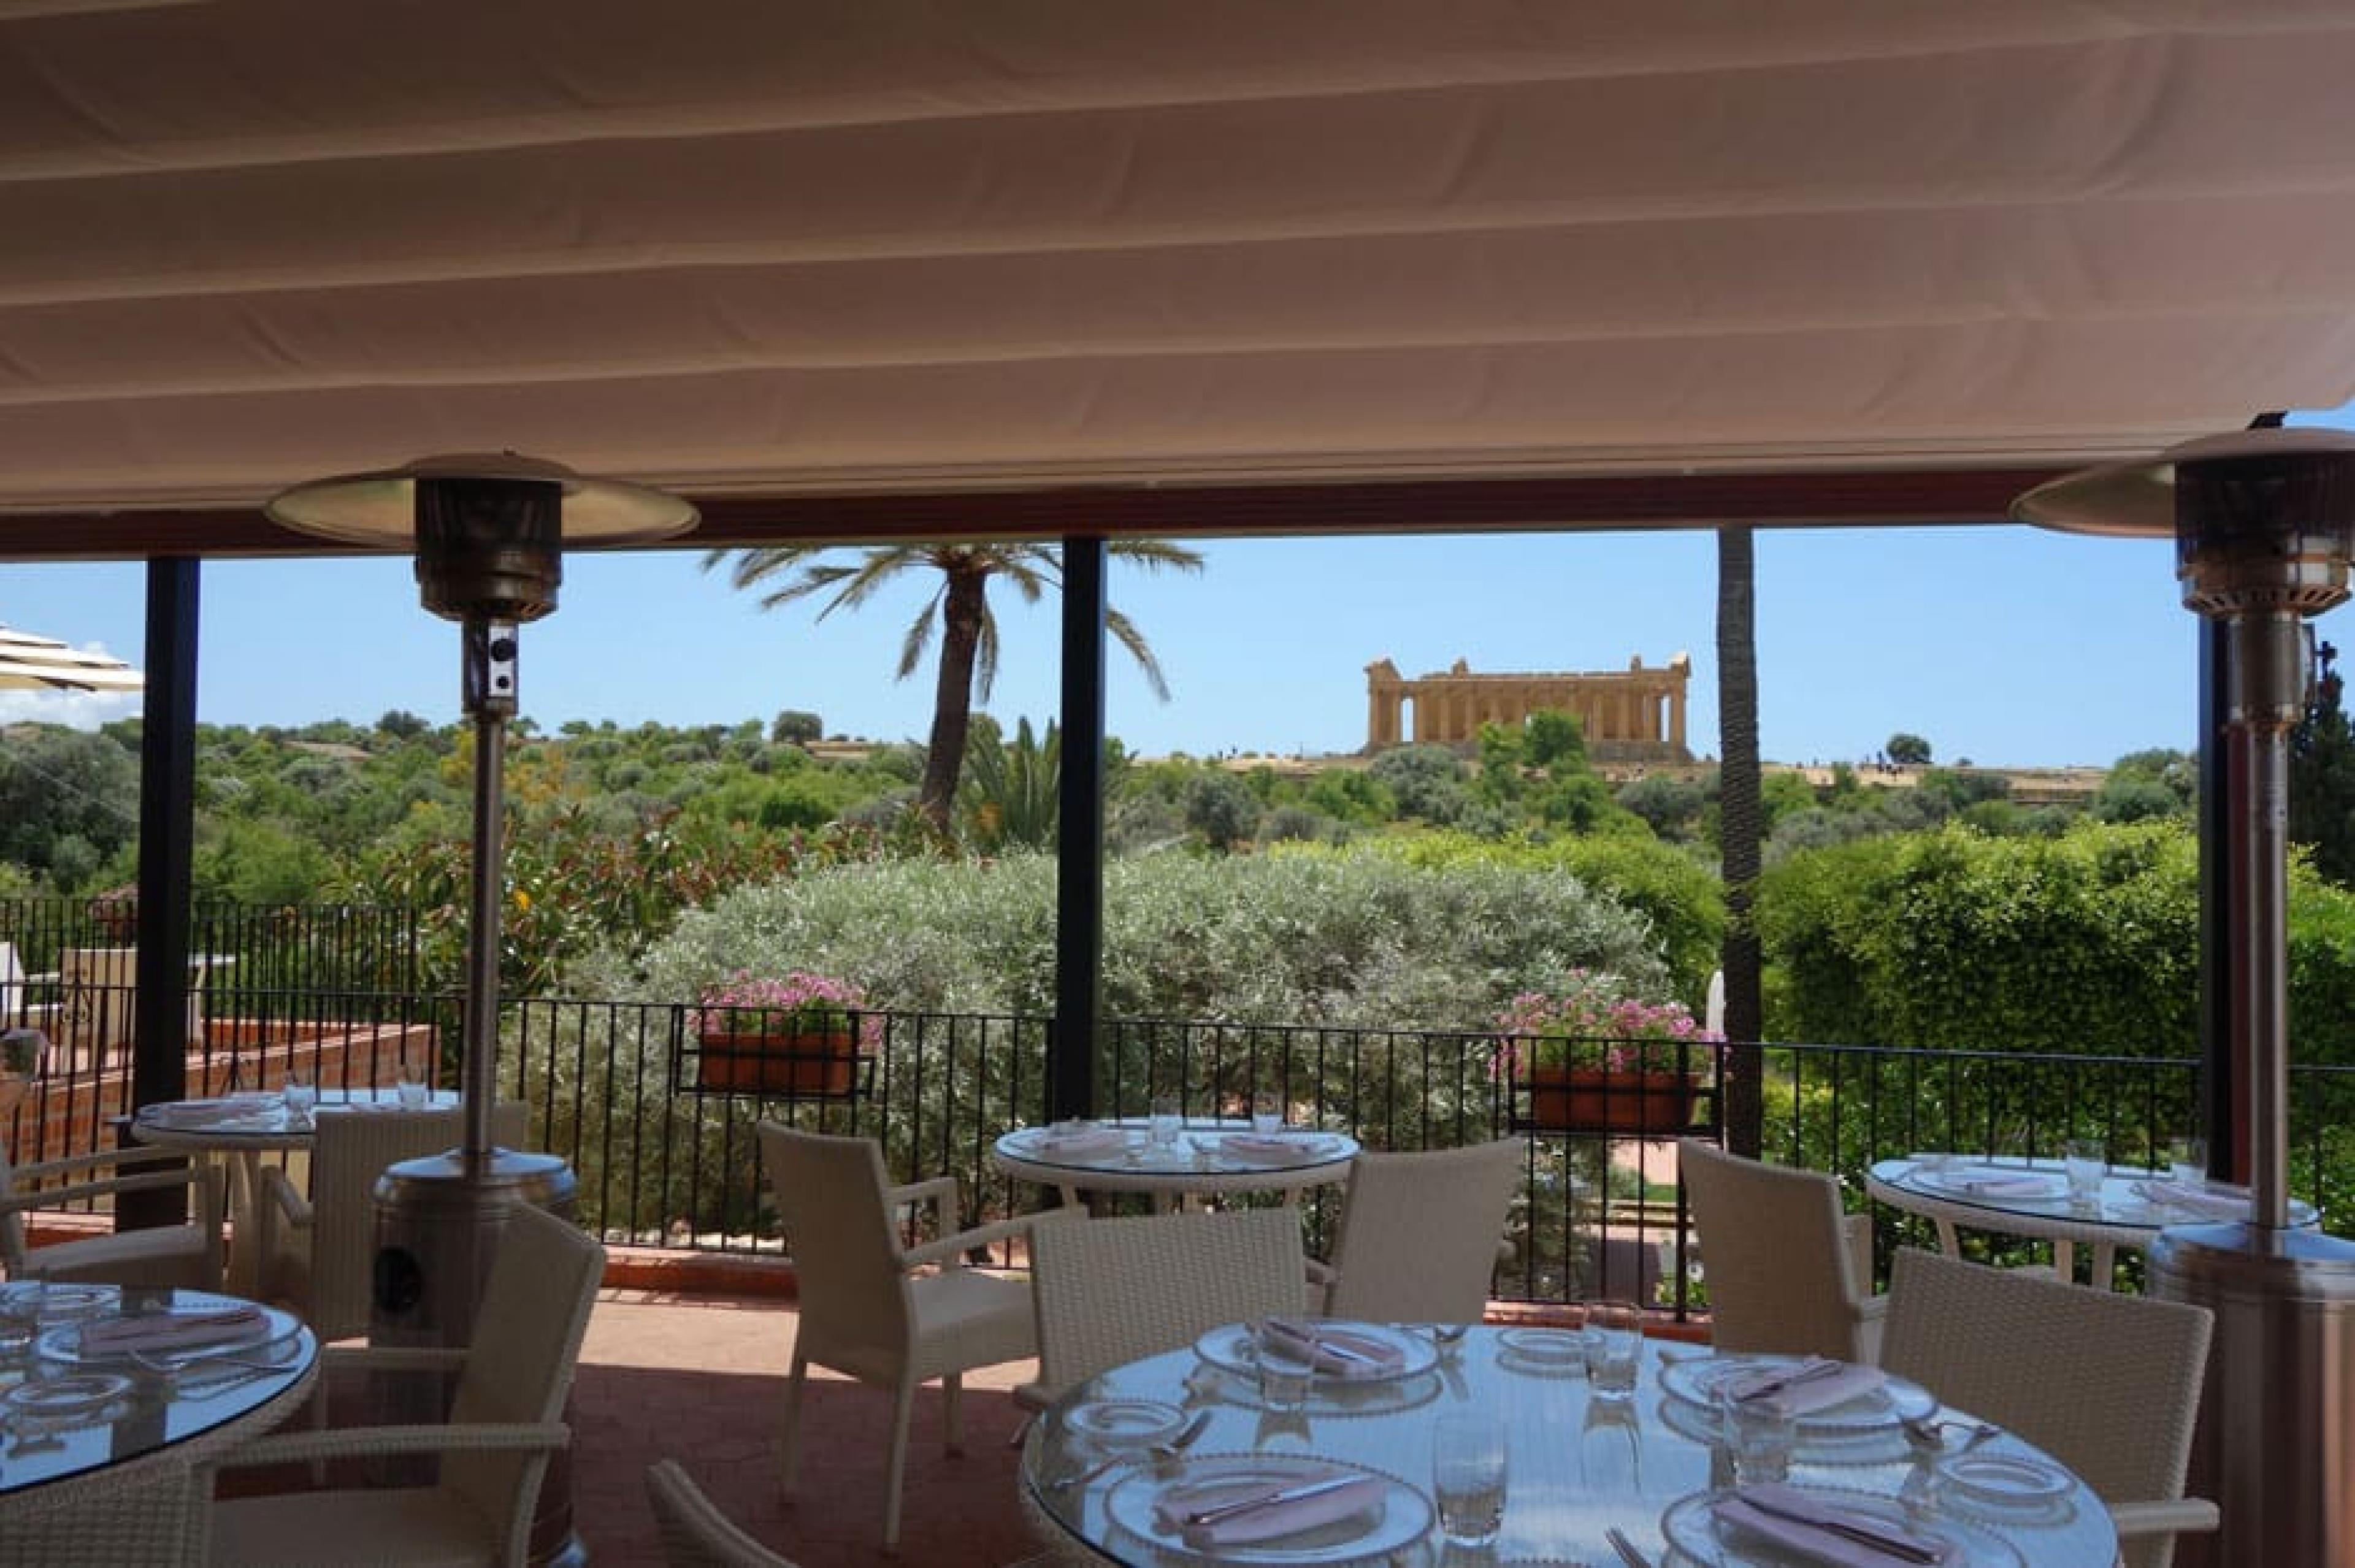 Dinning Area at Villa Athena Restaurant, Sicily, Italy